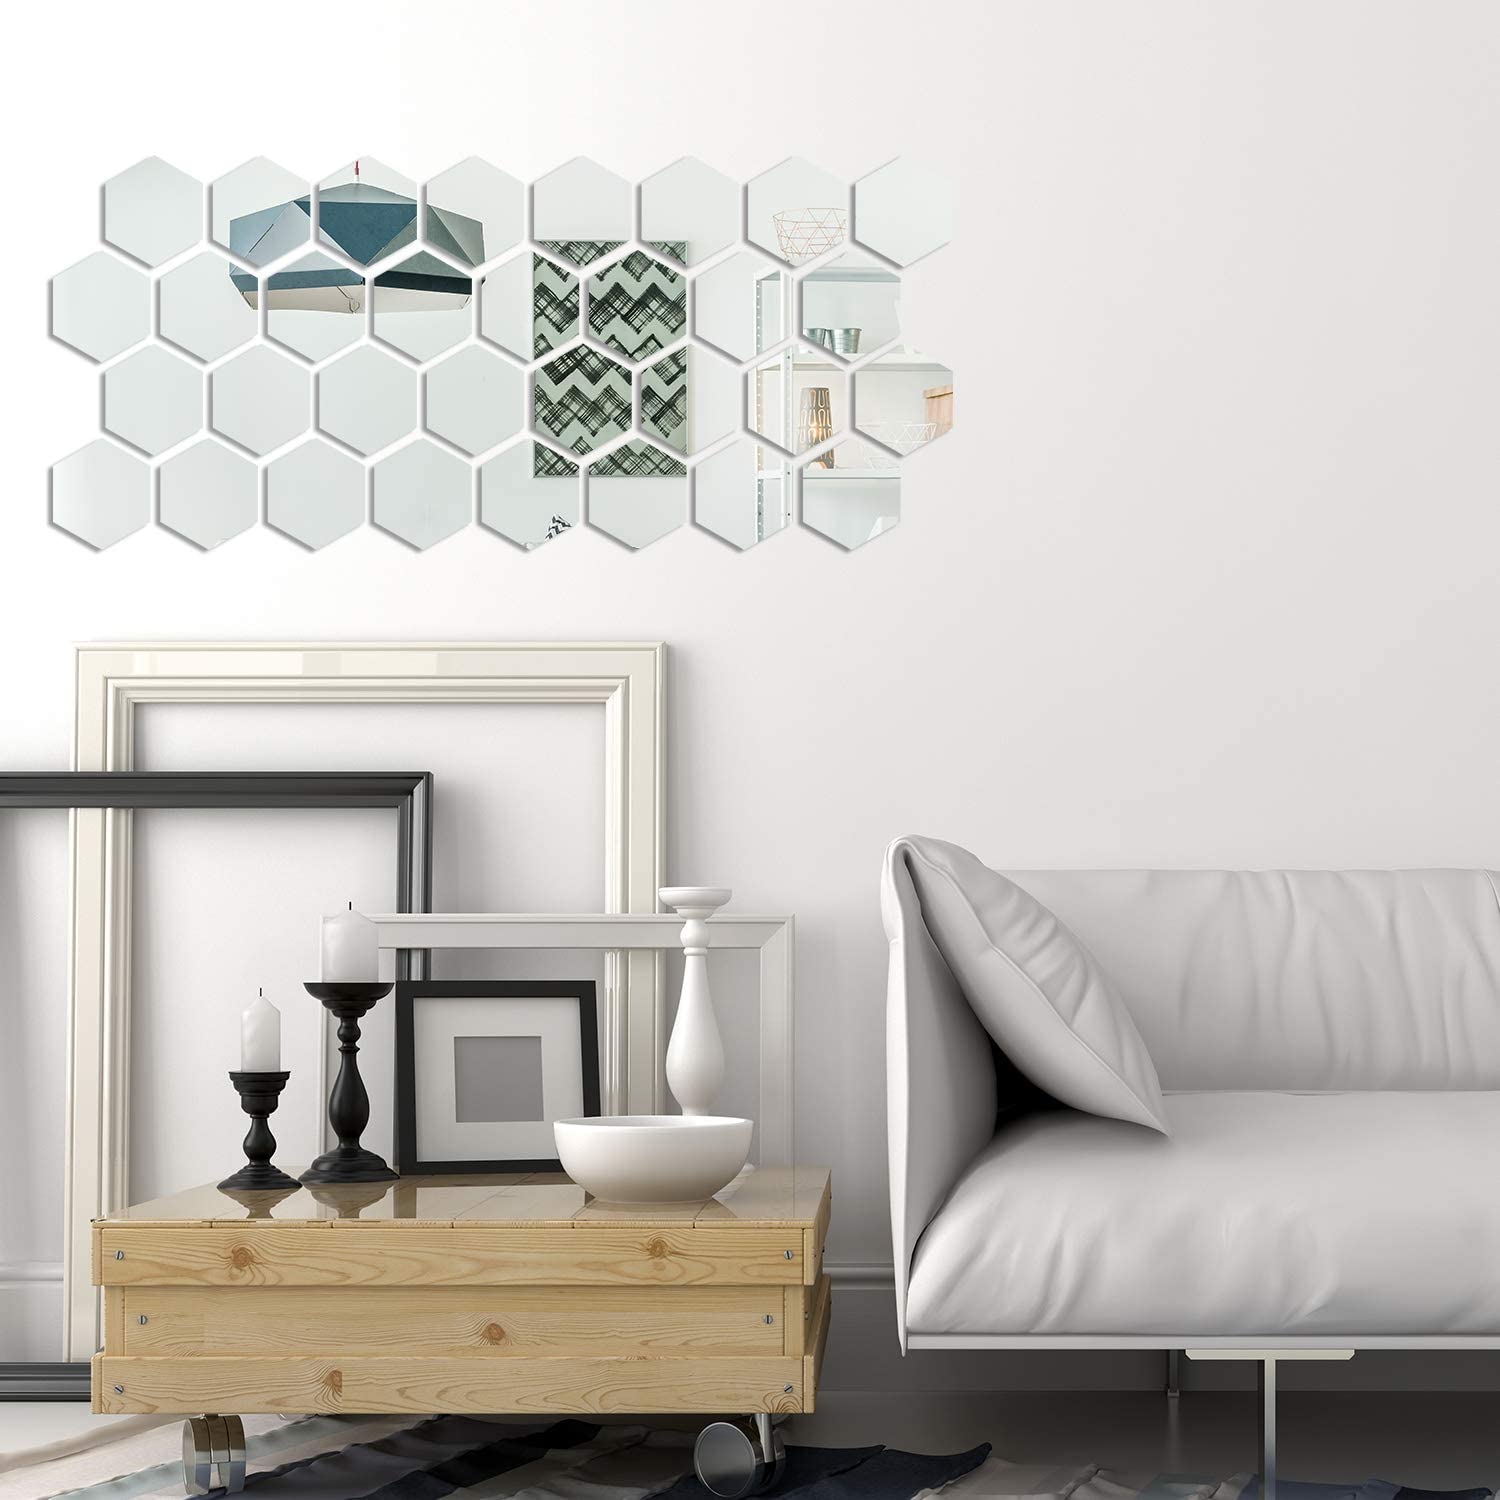 3d Acrylic with Silver Mirror 12 X12 Clear Mirror Acrylic Wall Sticker